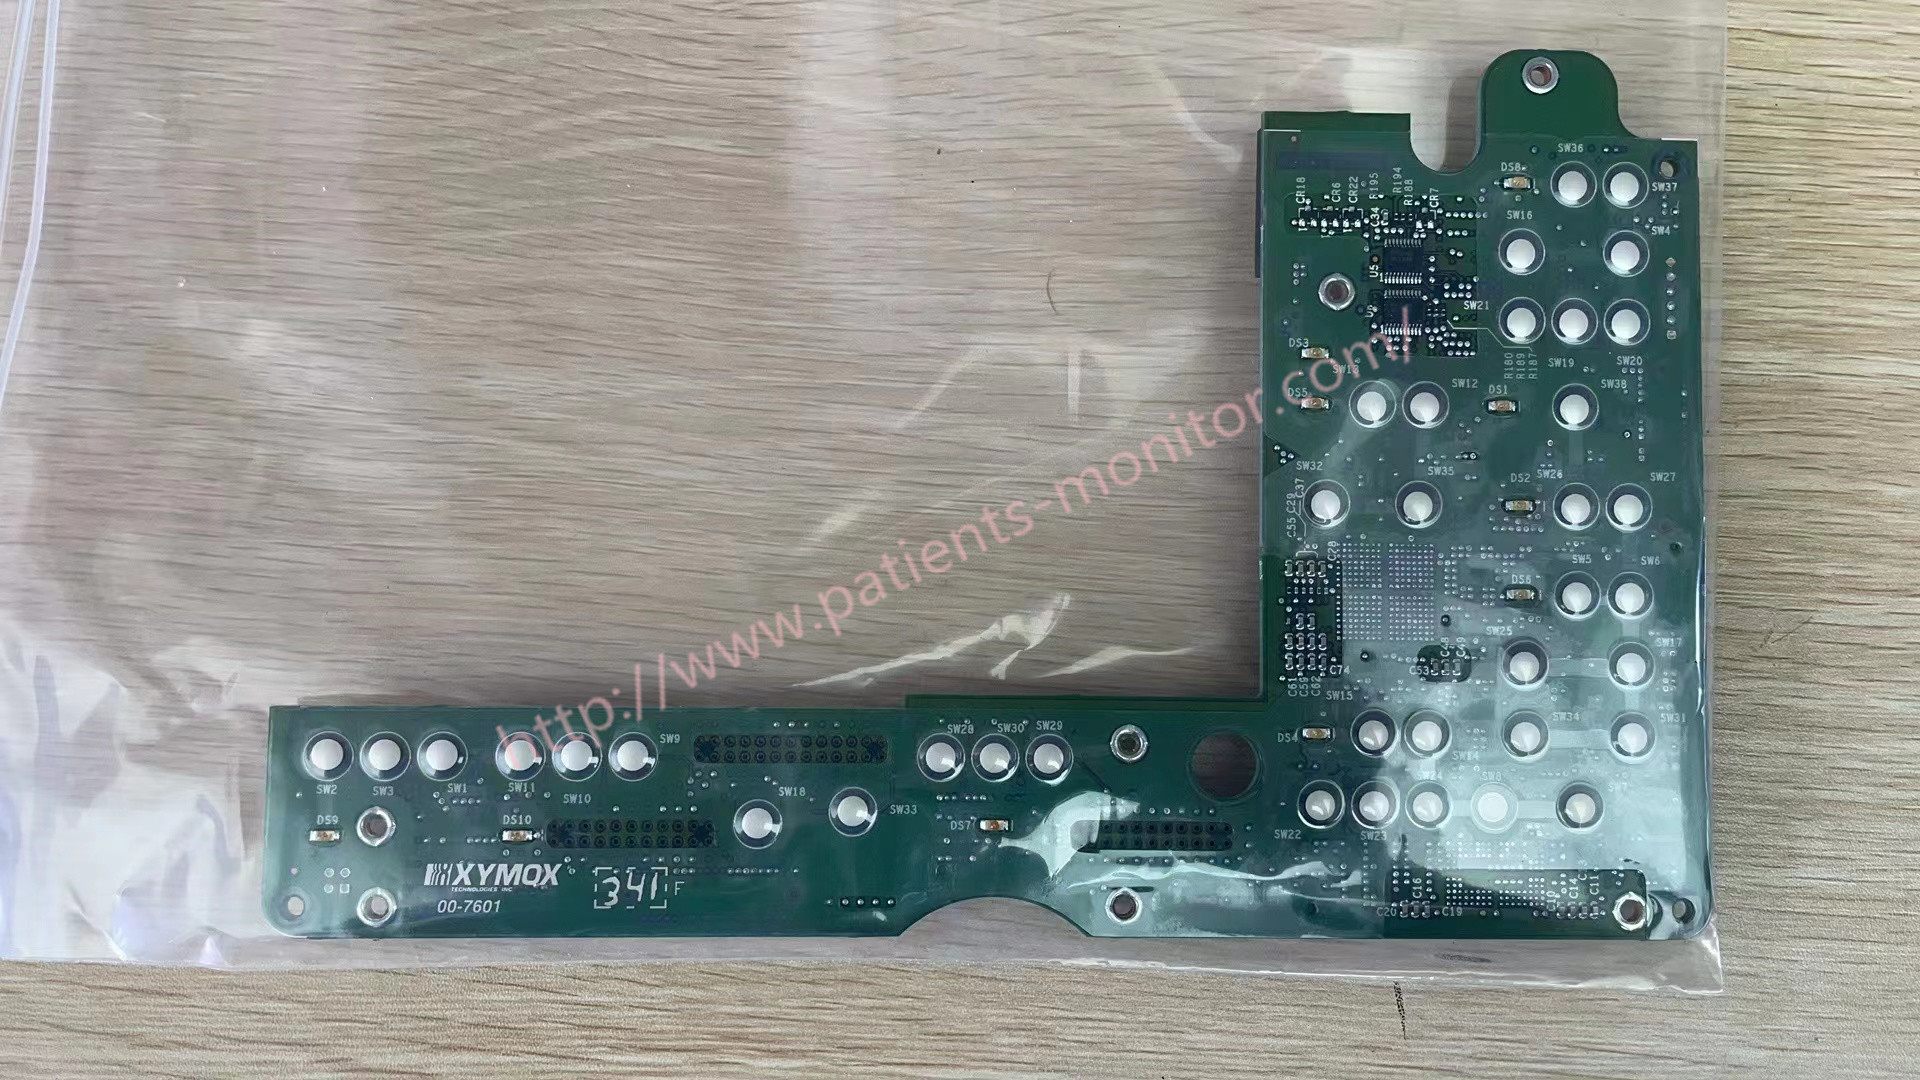 Med-tronic LP20e Defibrillator Machine Parts UI PCB Board BMW001248 30SEP02 3201966-005H